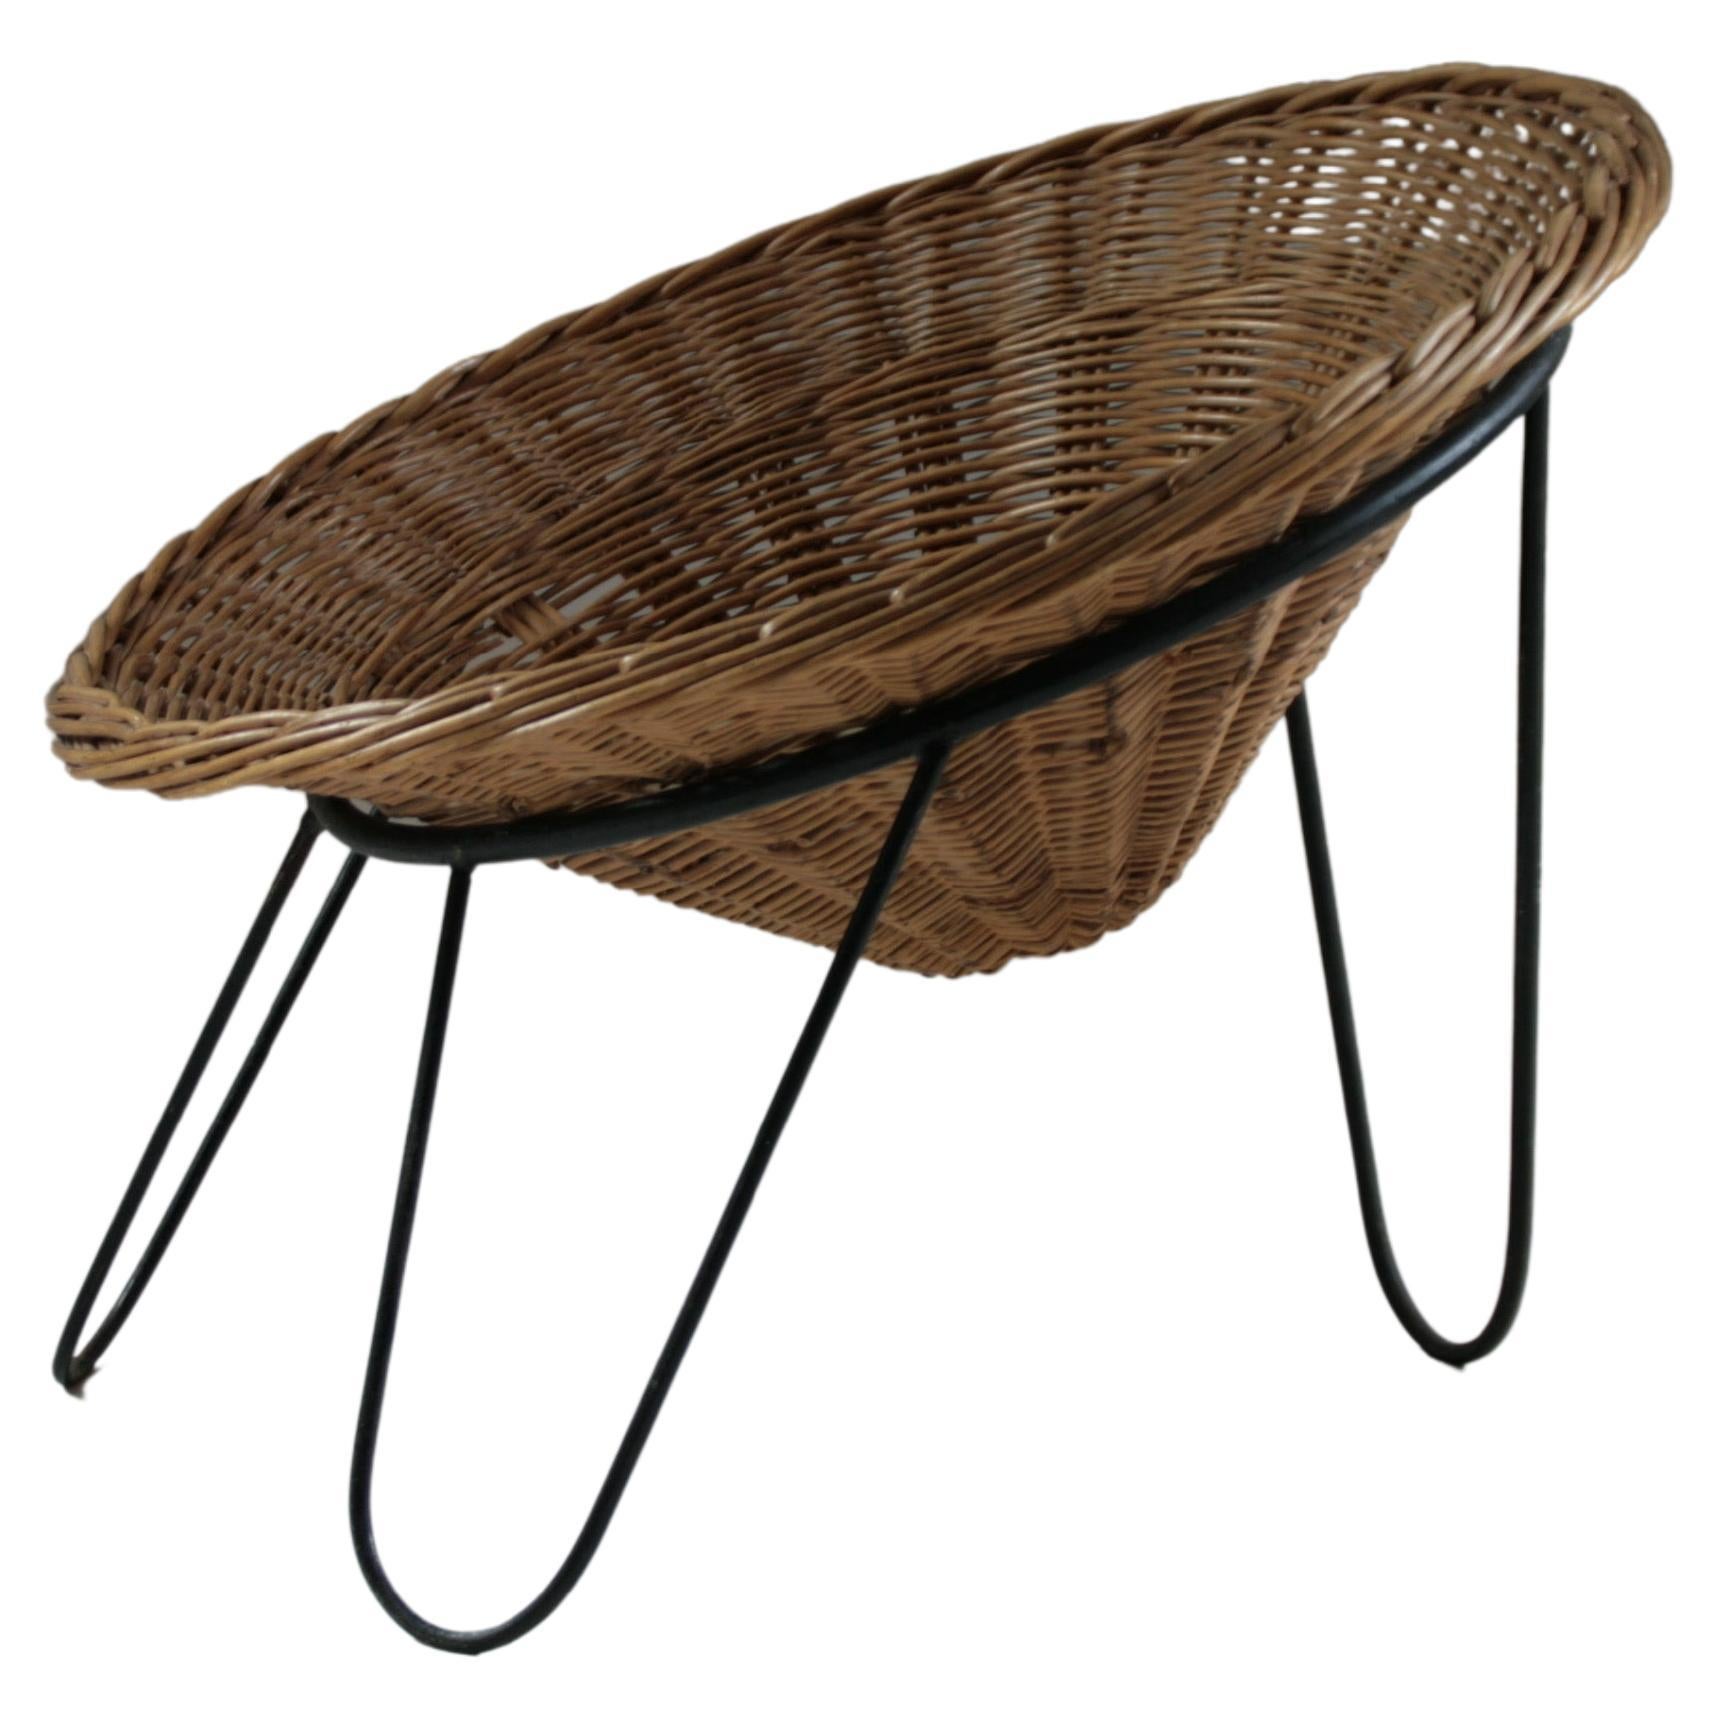 Basket Chair in Wicker and Tripod Metal Legs, 1950s